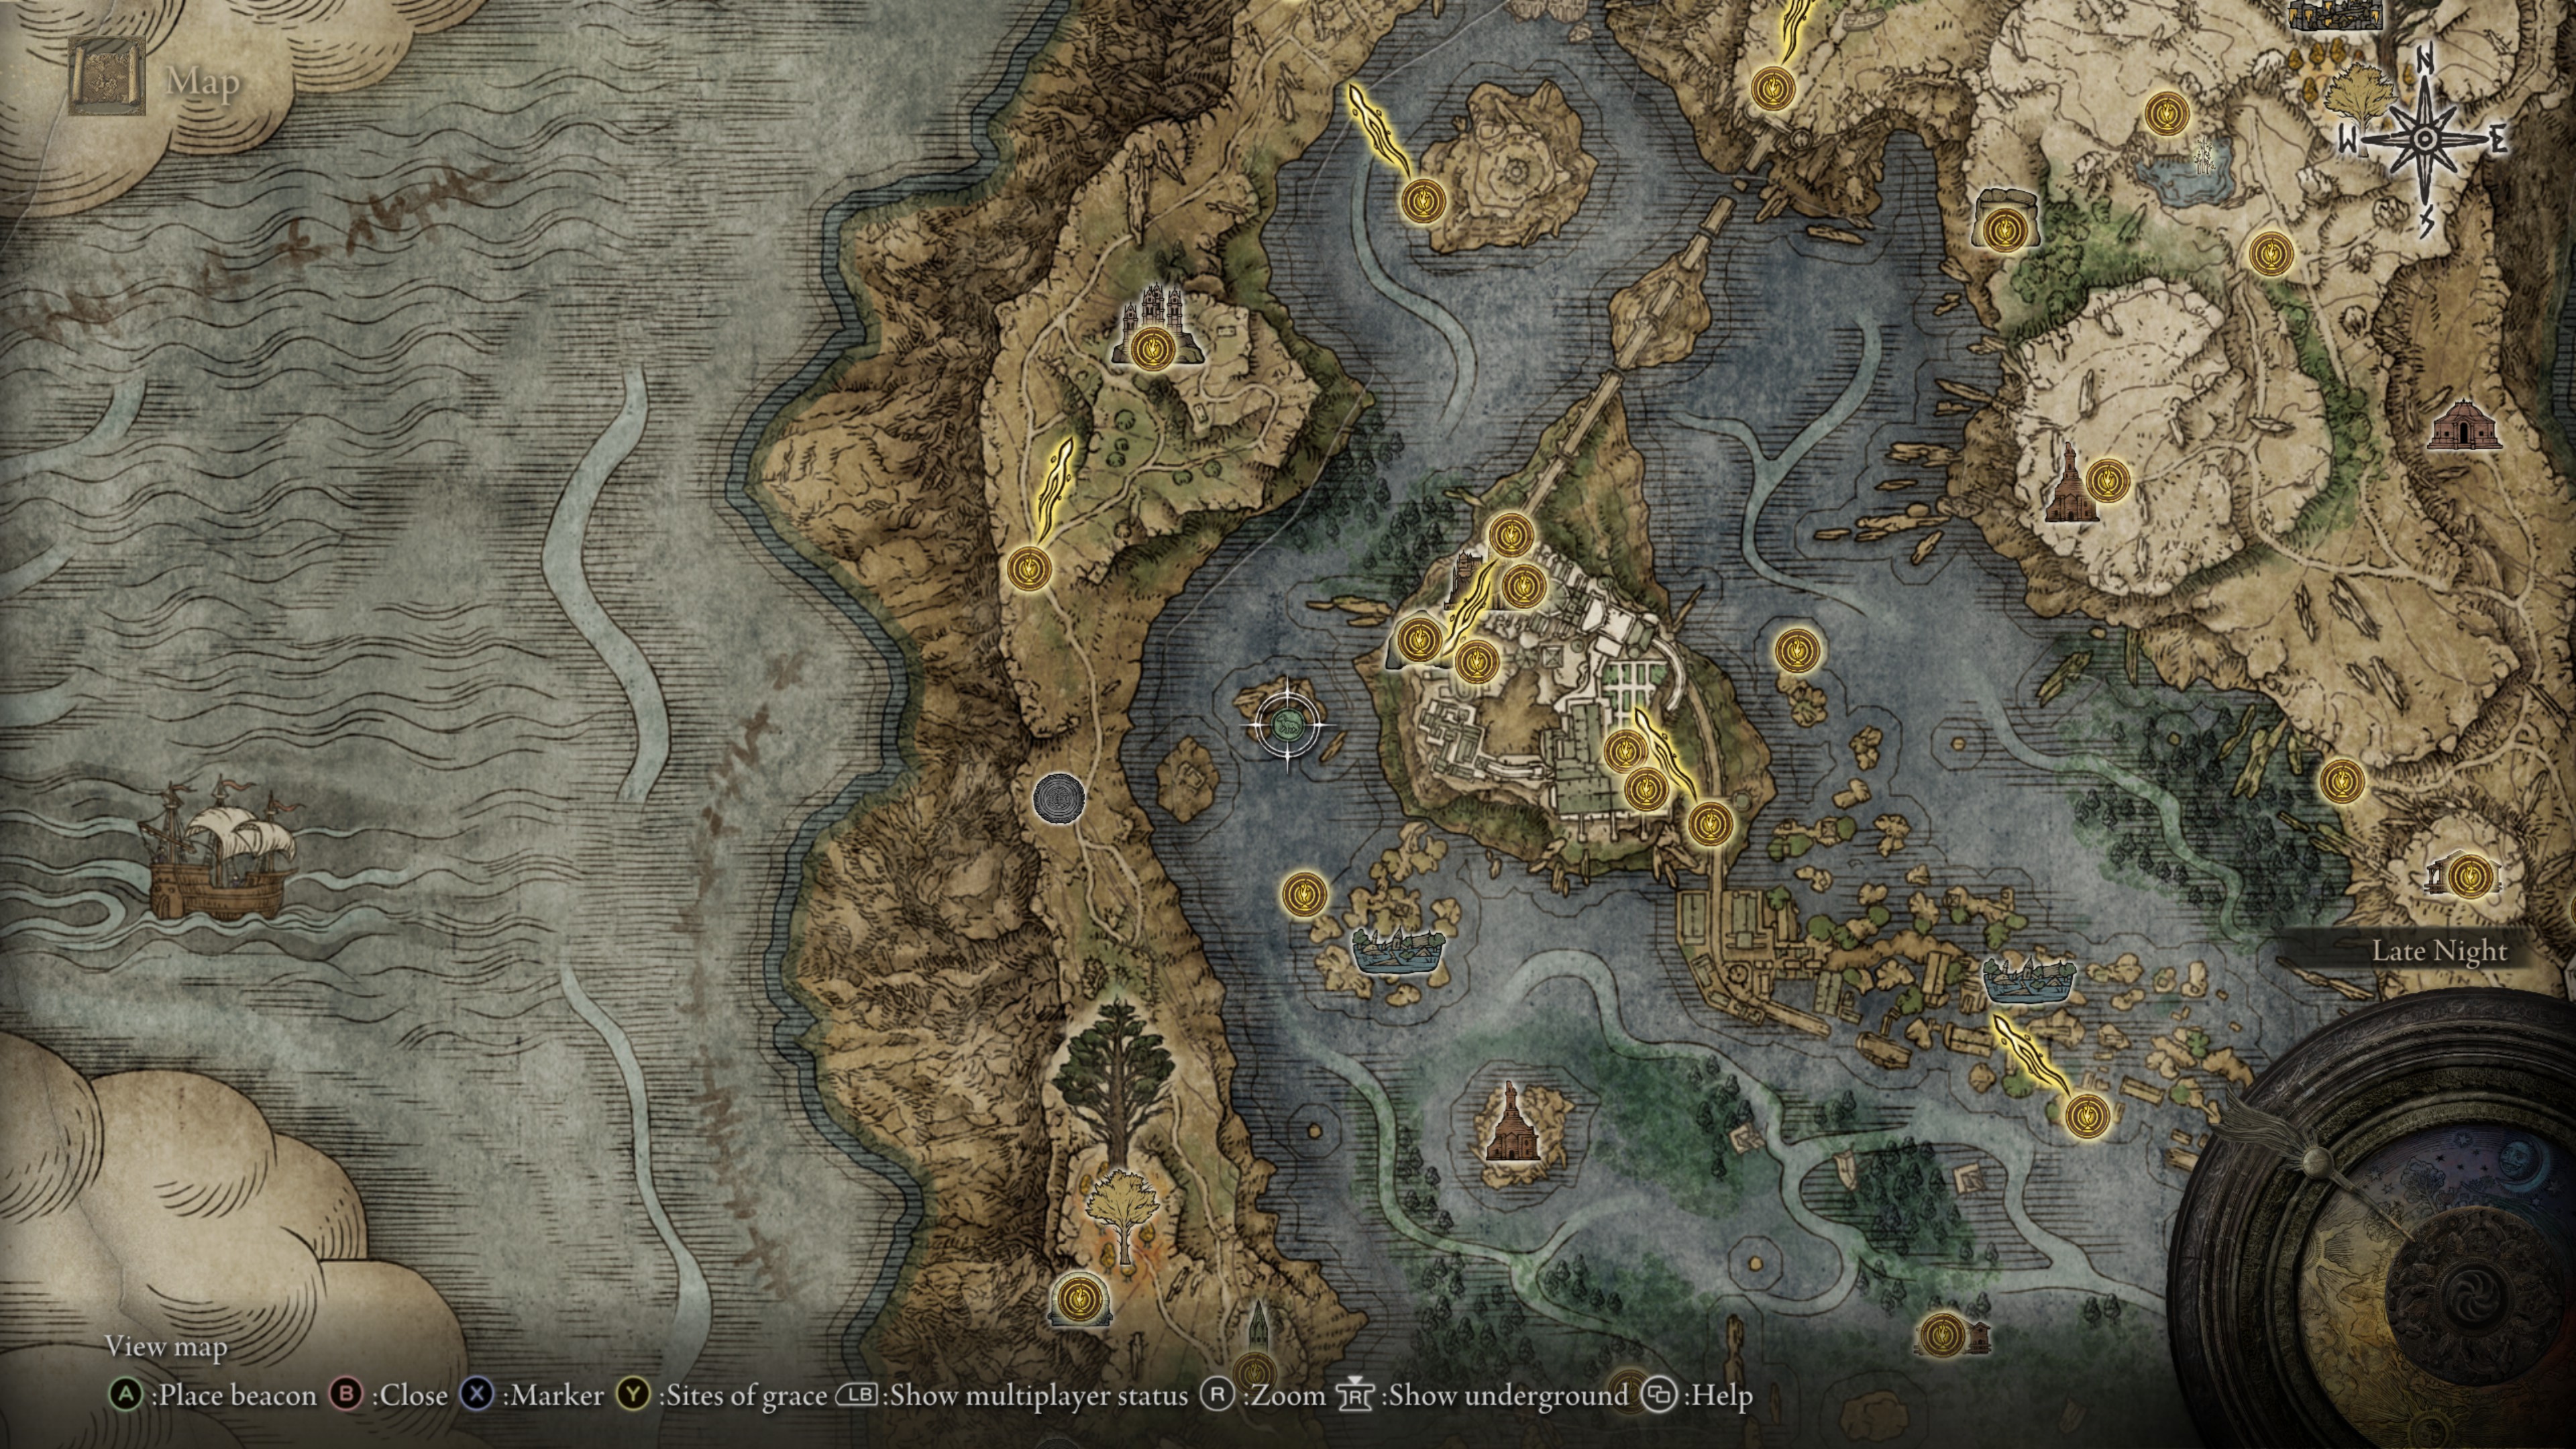 Elden Ring Academy of Raya Lucaria walkthrough and map - Polygon